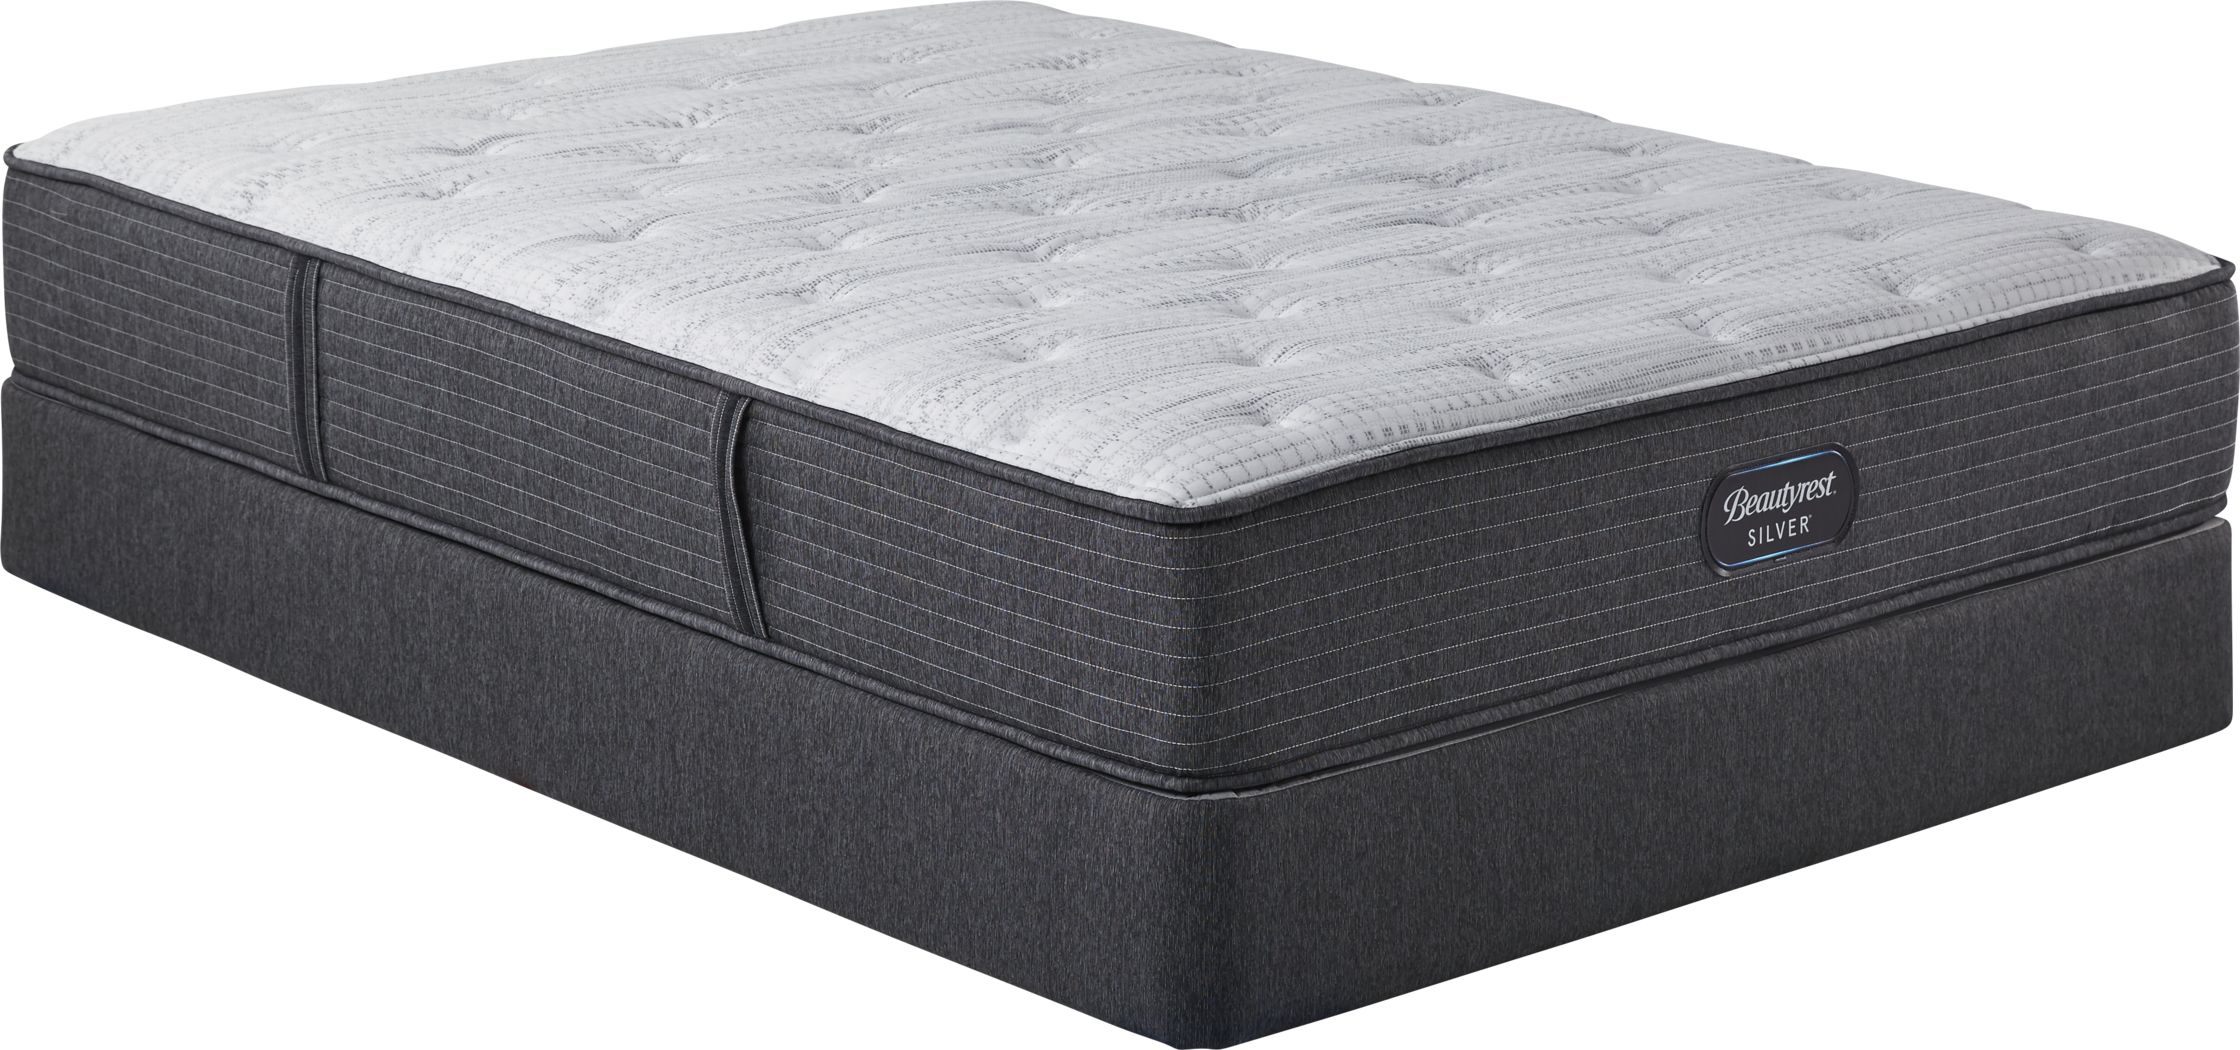 beautyrest recharge canton queen mattress set